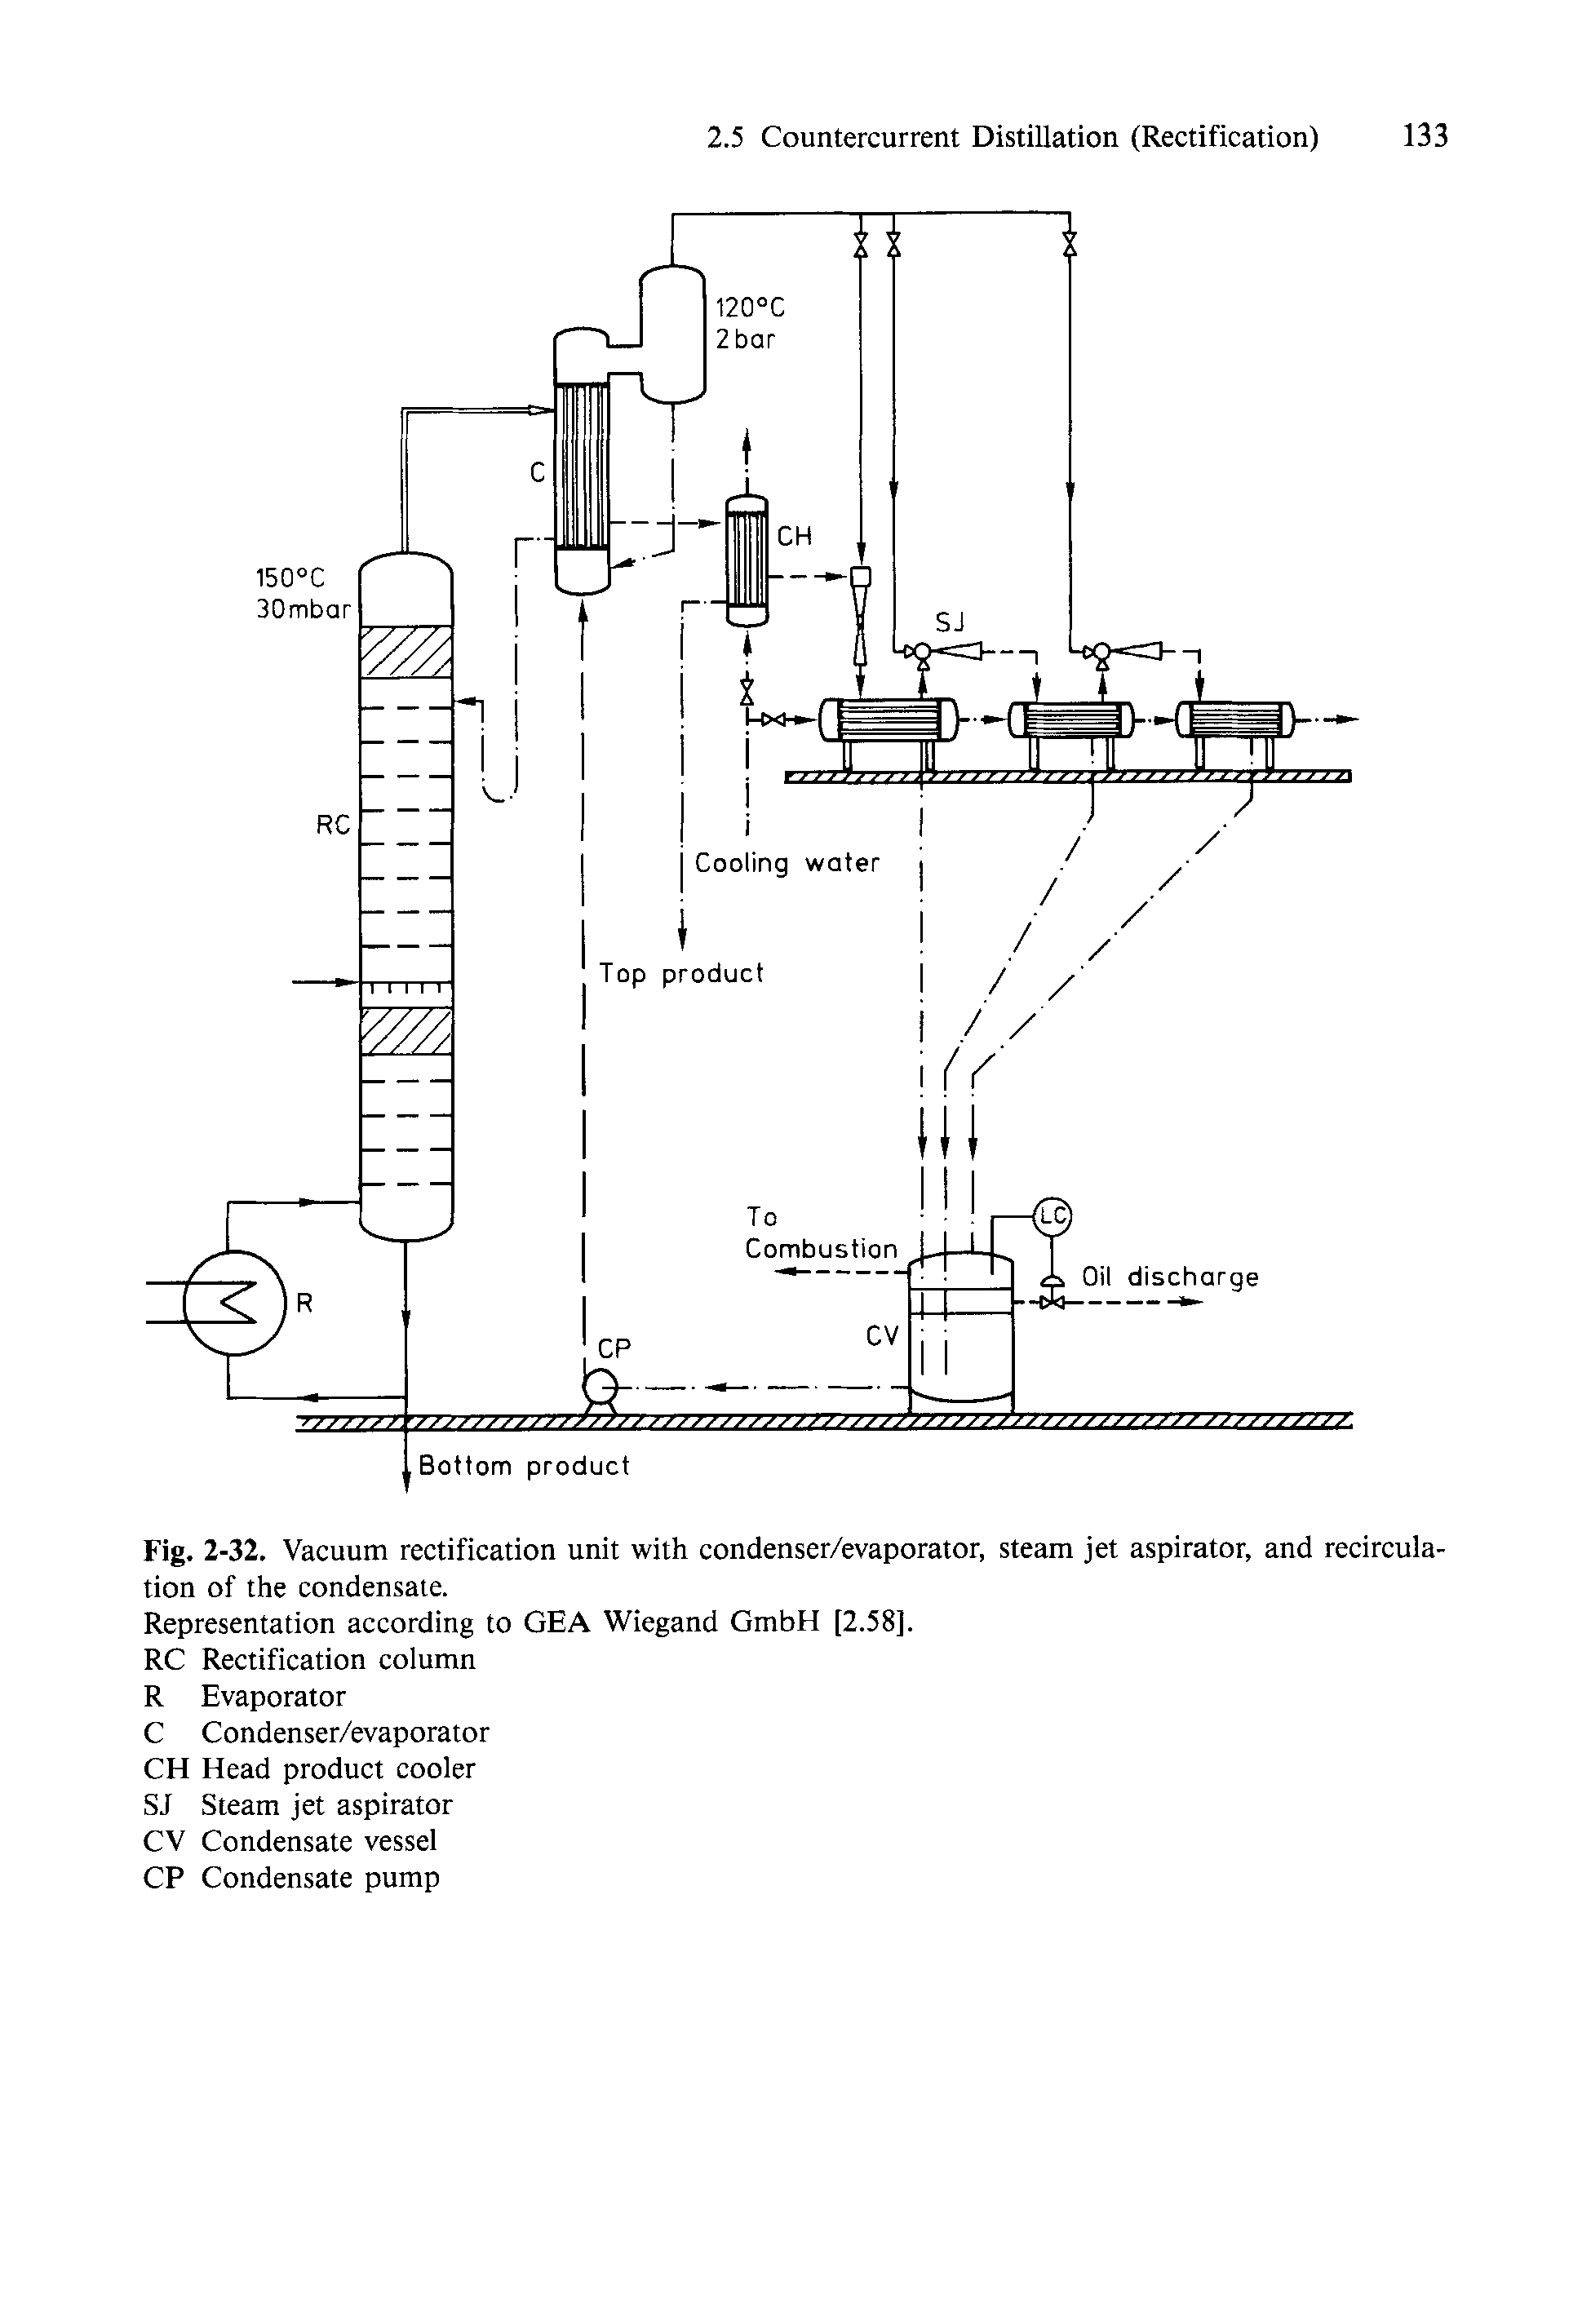 Fig. 2-32. Vacuum rectification unit with condenser/evaporator, steam jet aspirator, and recirculation of the condensate.